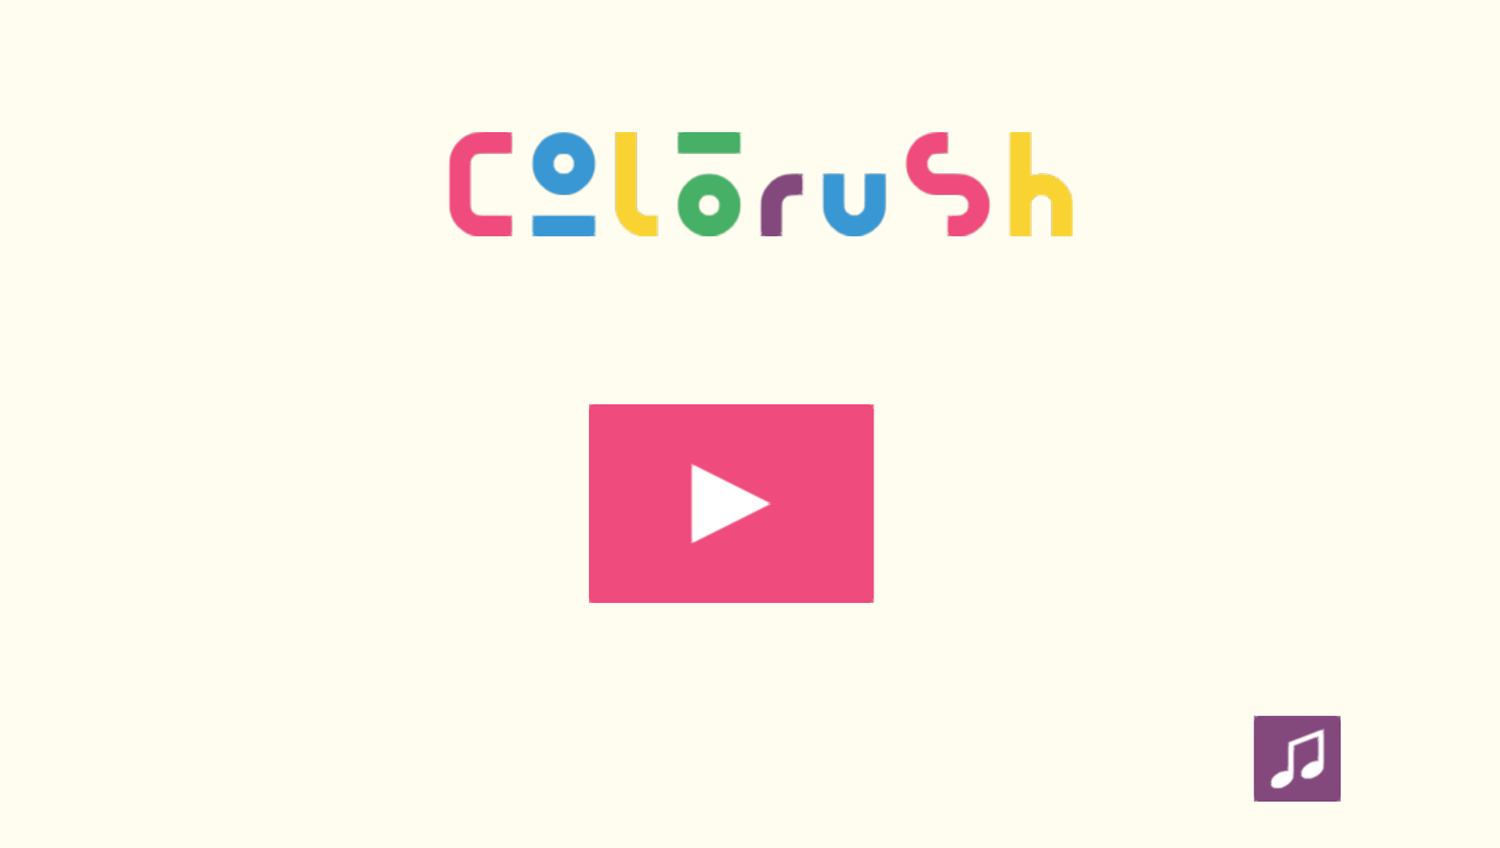 Colorush Game Welcome Screen Screenshot.